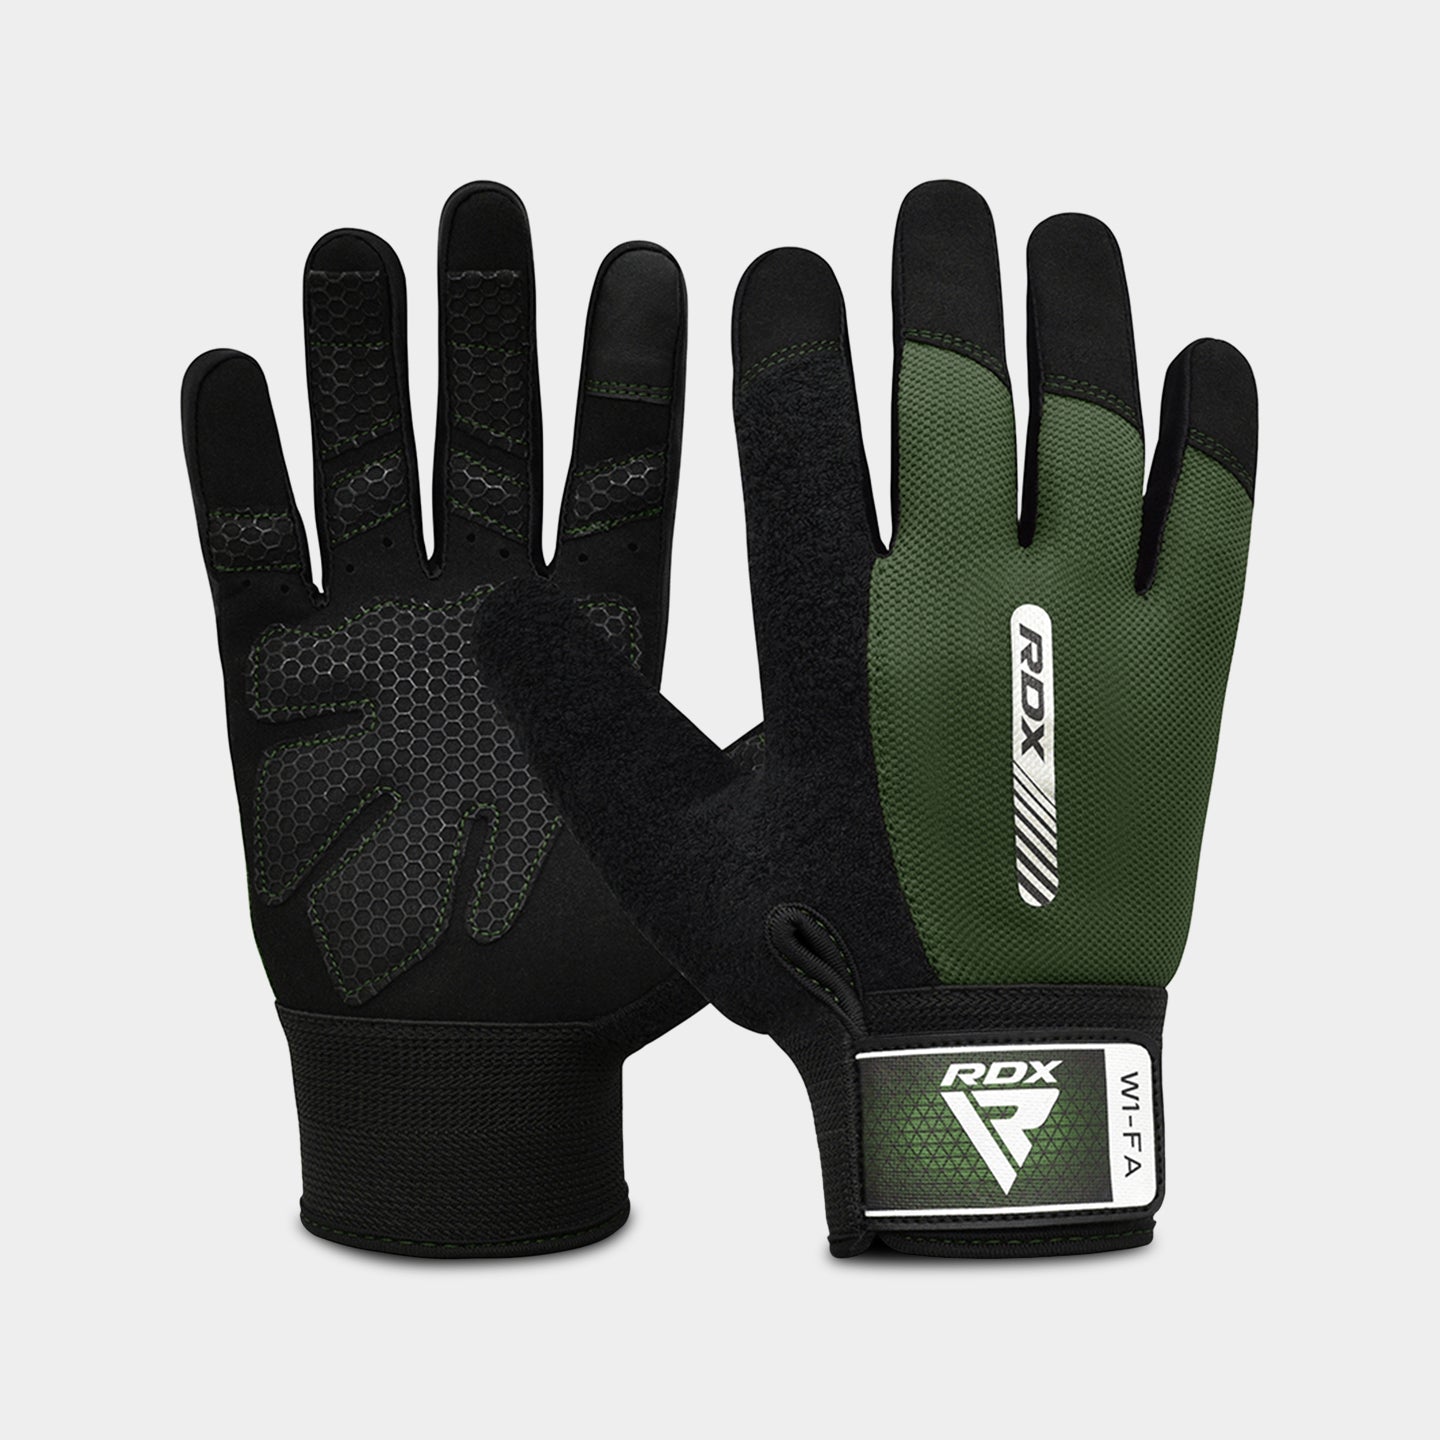 RDX Sports W1 Full Finger Gym Workout Gloves, XL, Army Green A1